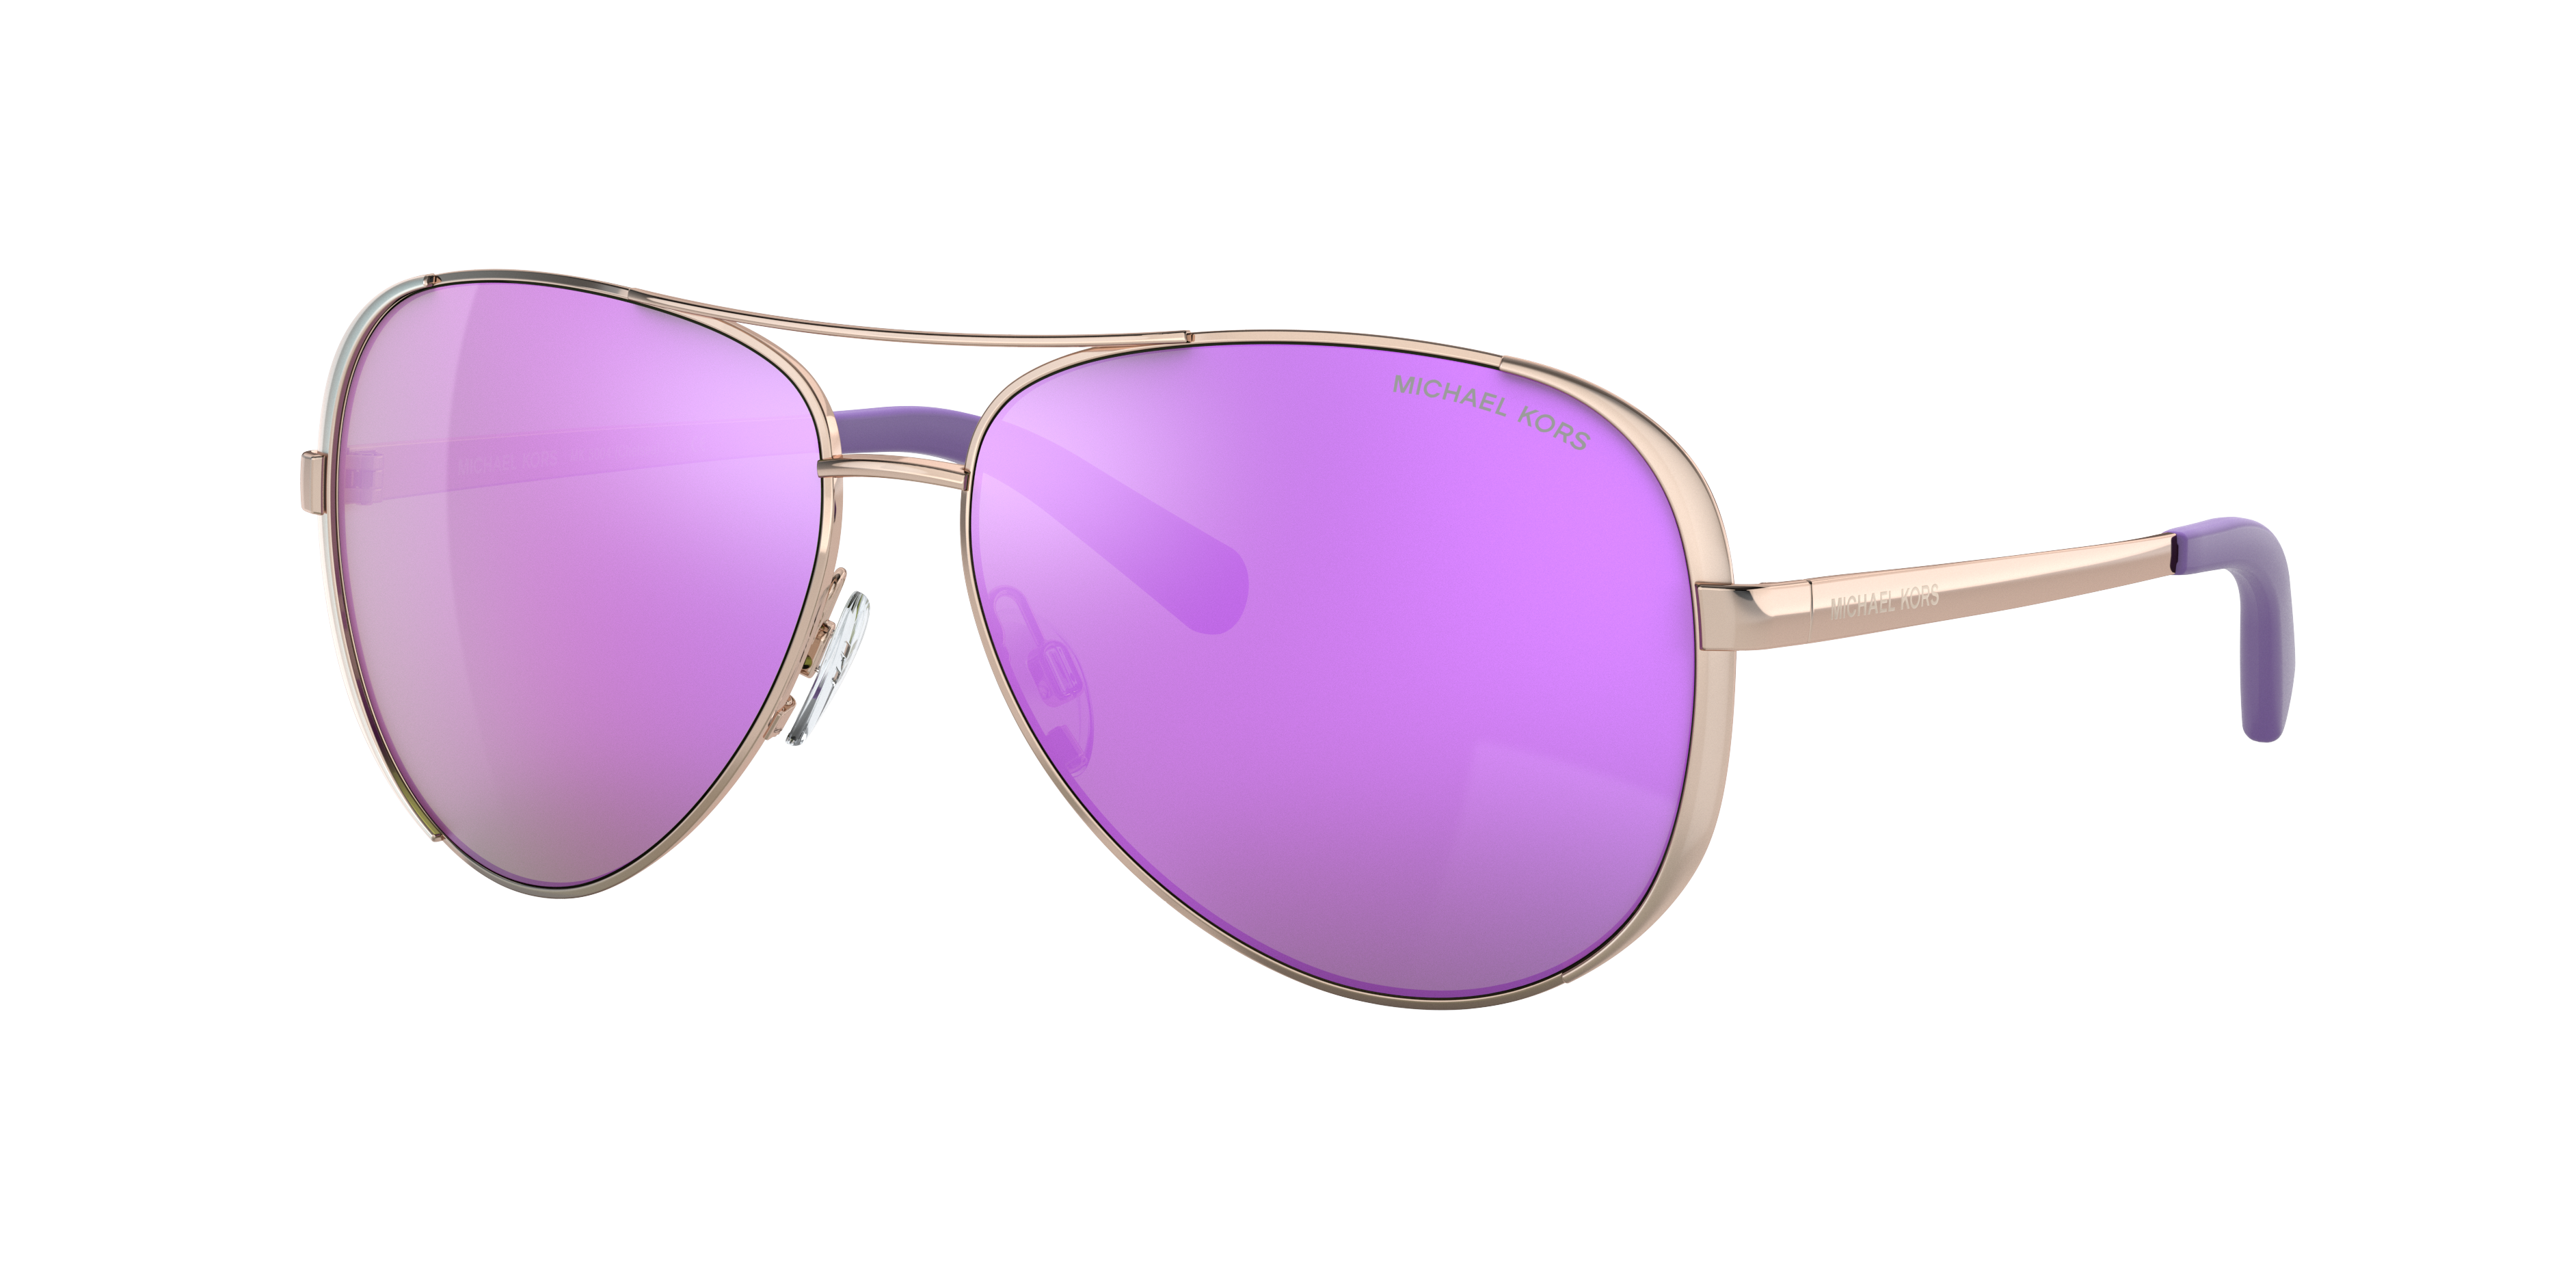 chelsea sunglasses mk5004